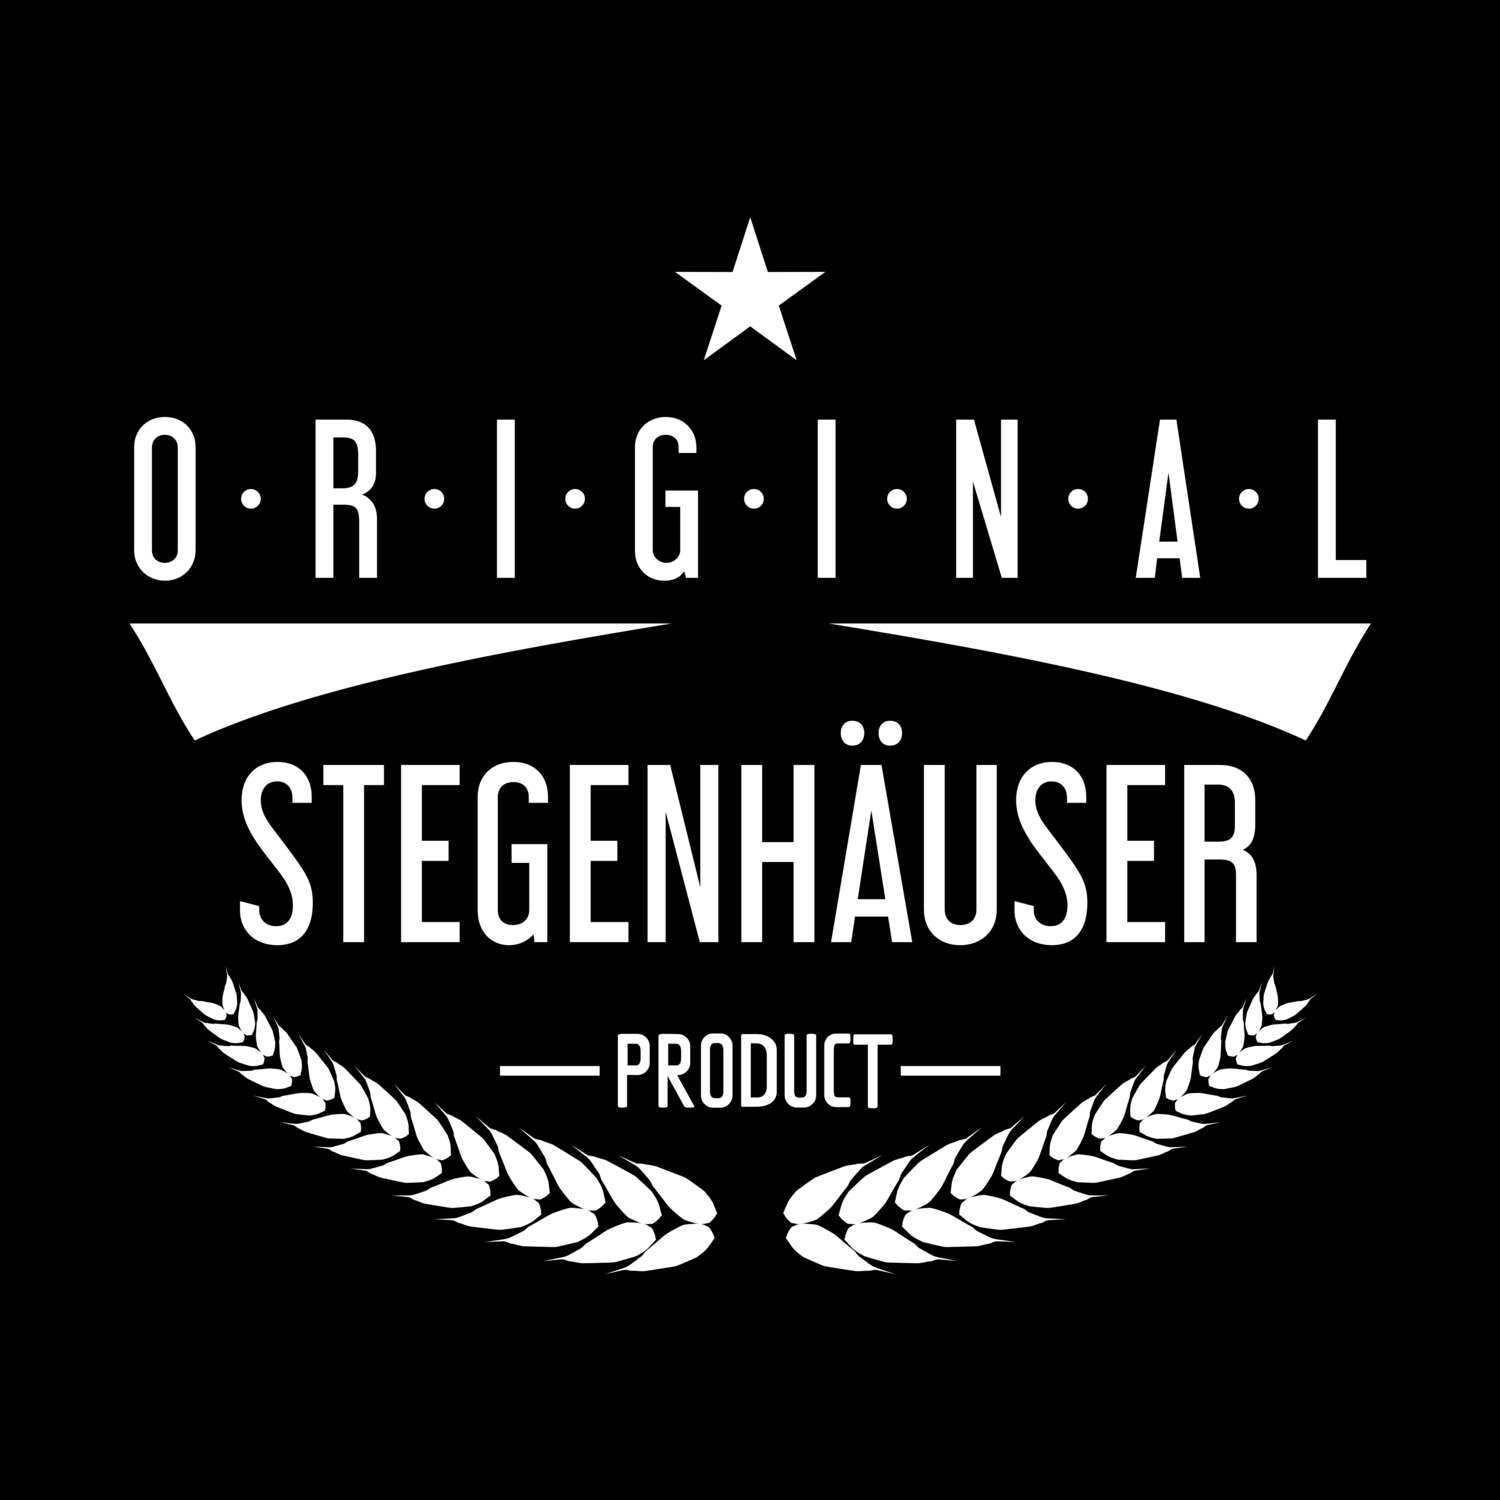 Stegenhäuser T-Shirt »Original Product«